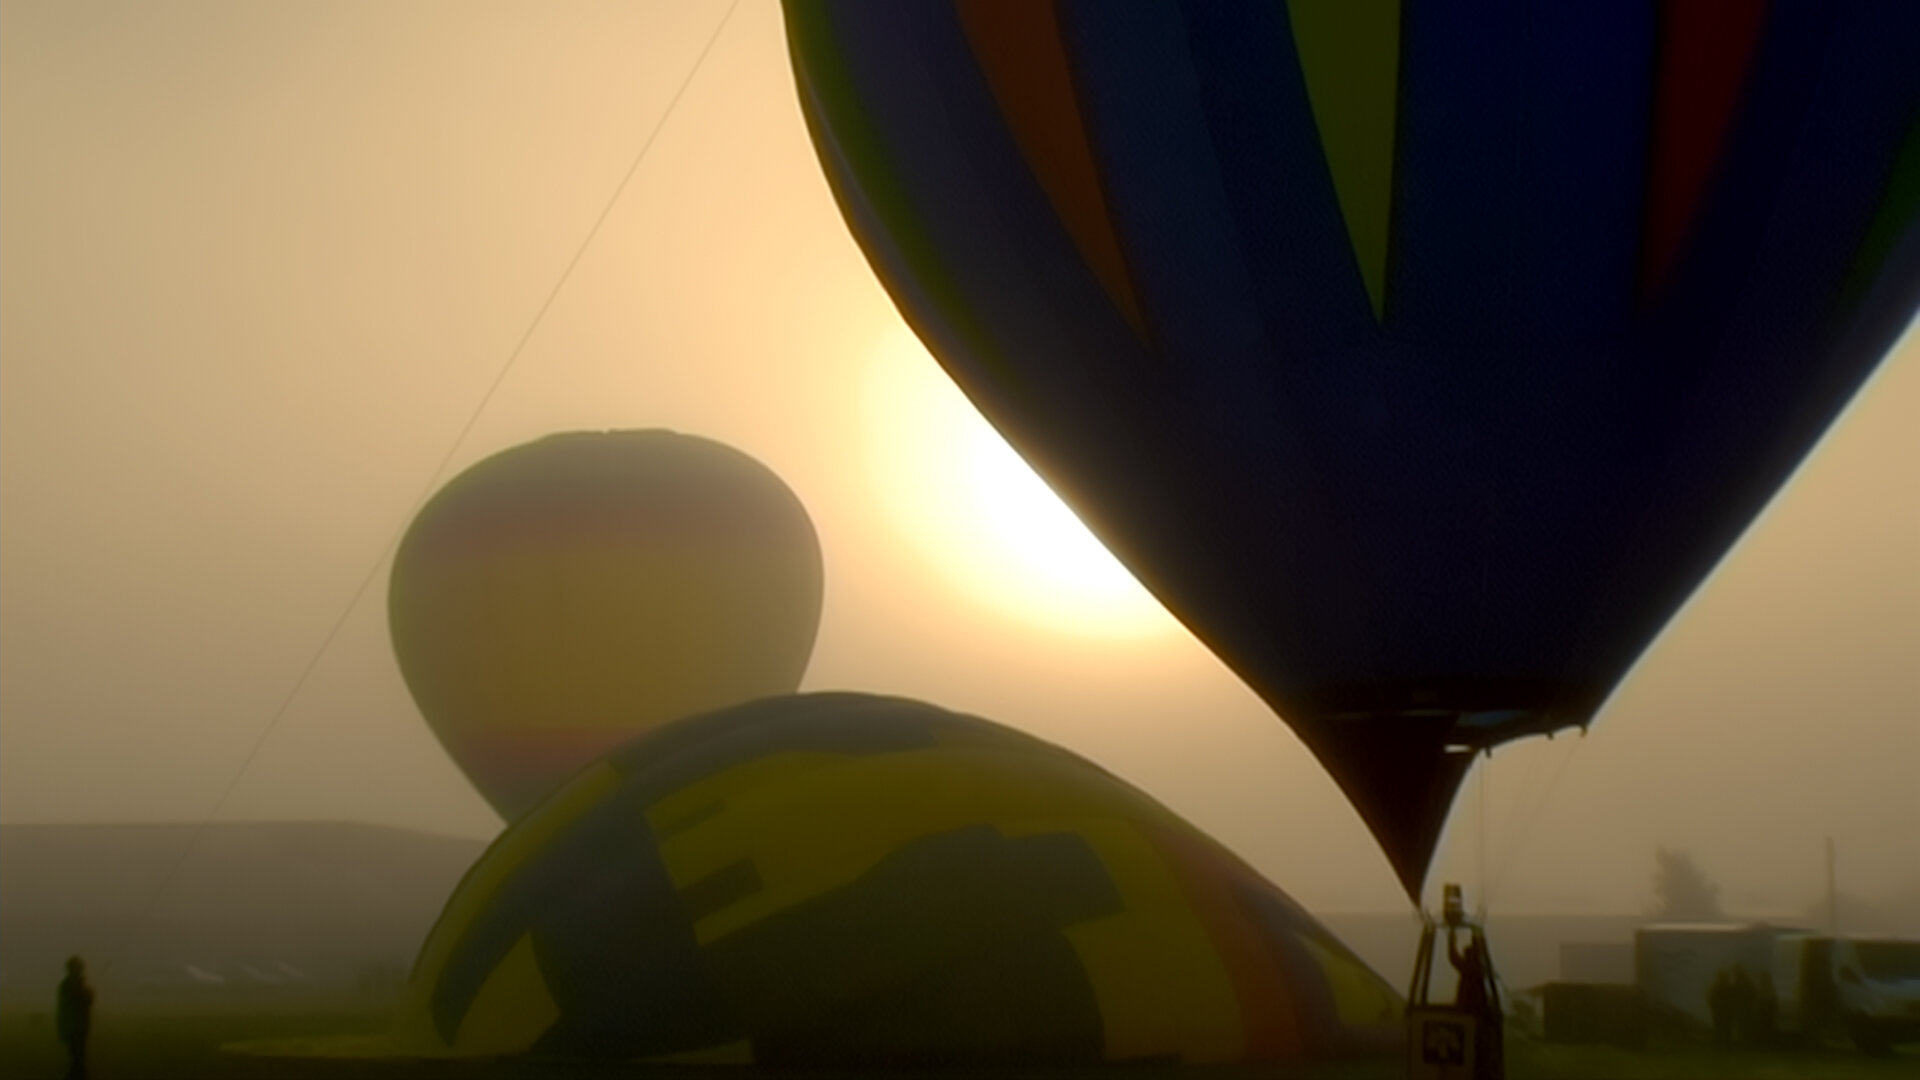 Balloon-shadowed-by-sun-.jpg